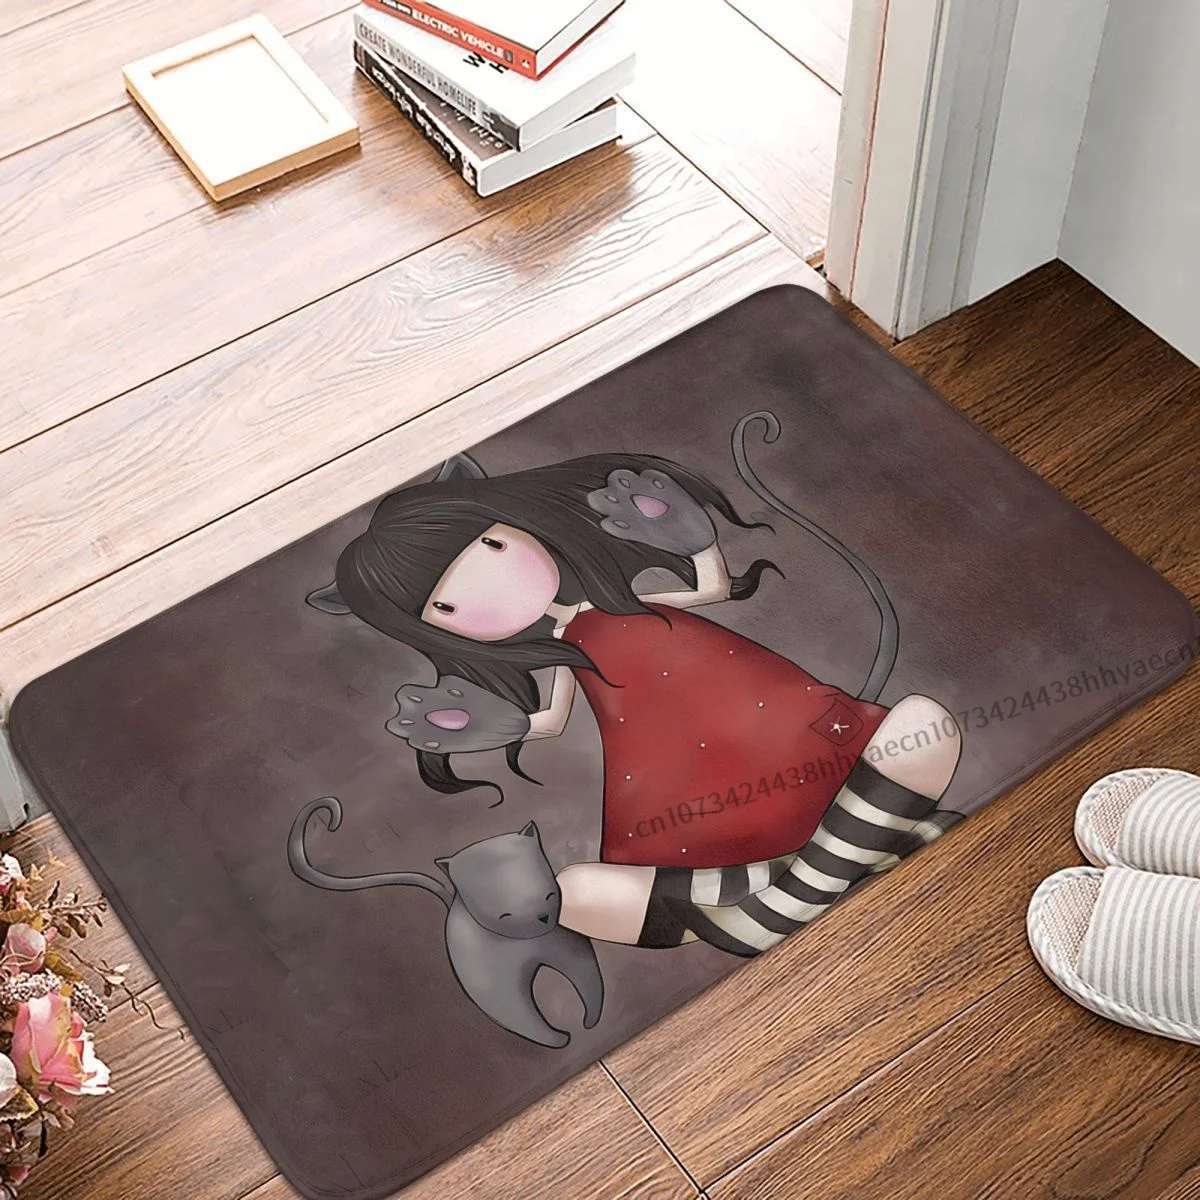 

Santoro Gorjuss Manga Cute Girl Bathroom Non-Slip Carpet Black Cat Flannel Mat Welcome Doormat Floor Decor Rug